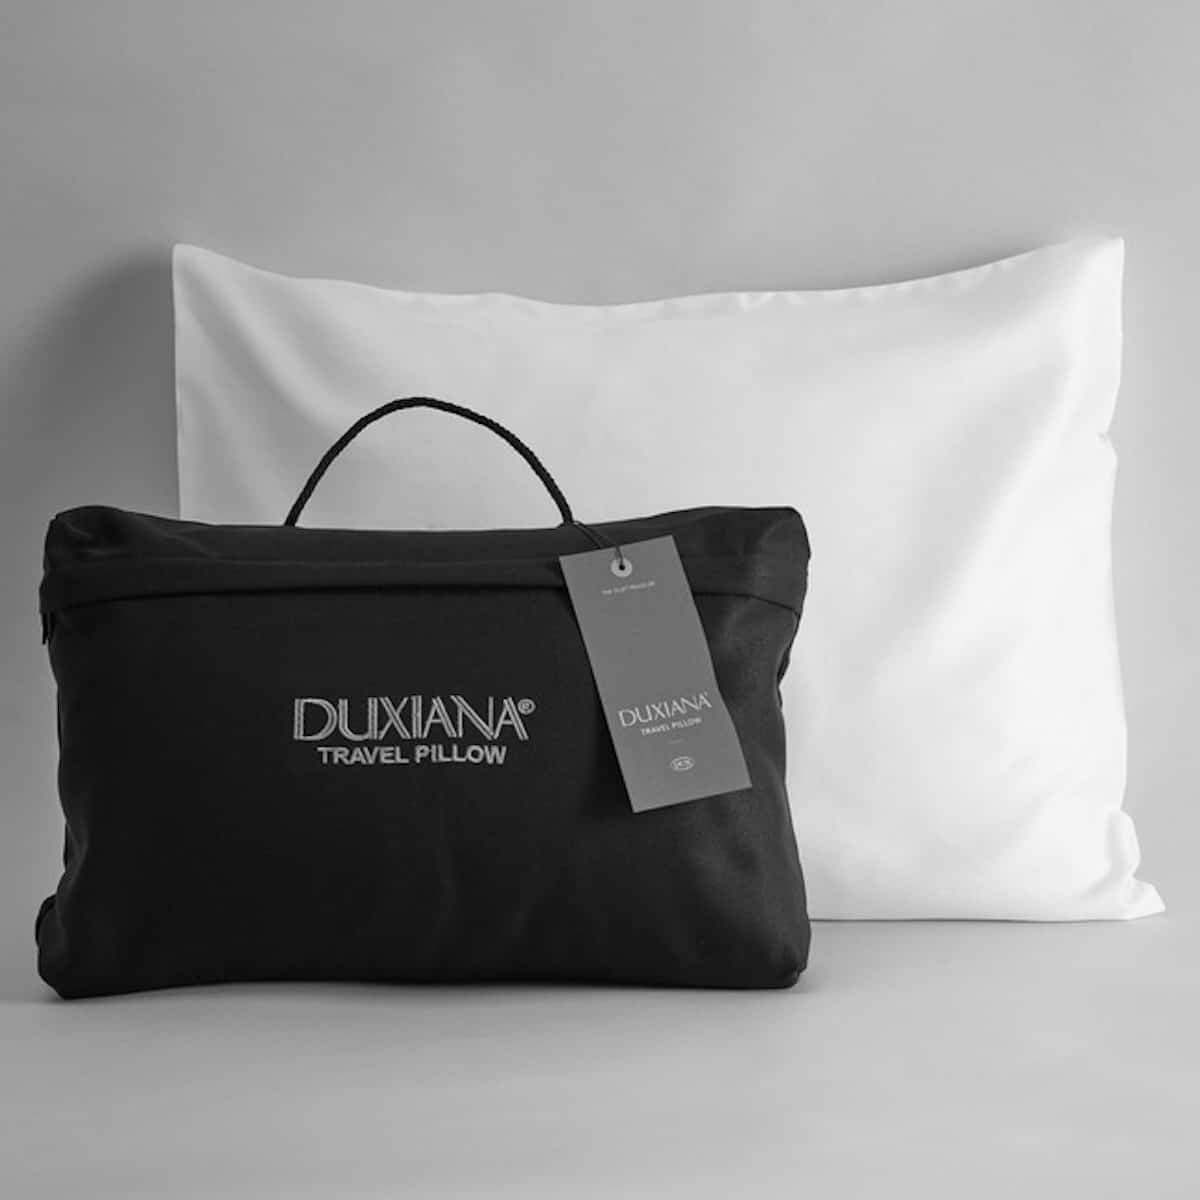 Best Travel Accessories for Women-Duxiana Travel Pillow